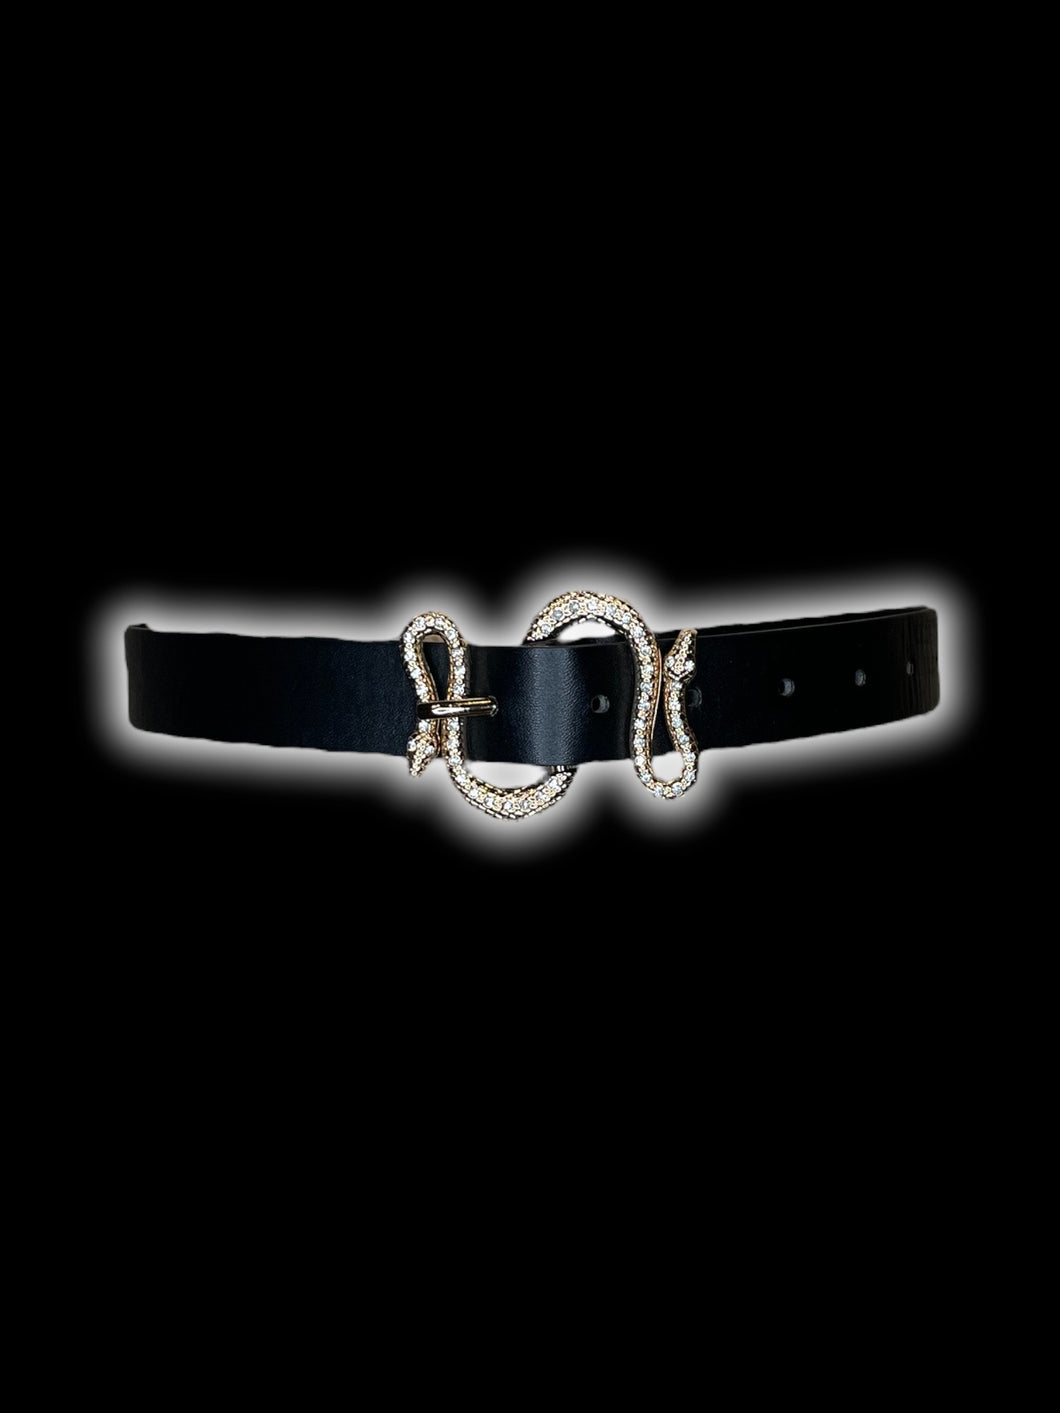 XL Black pleather adjustable belt w/ gold-like snake buckle